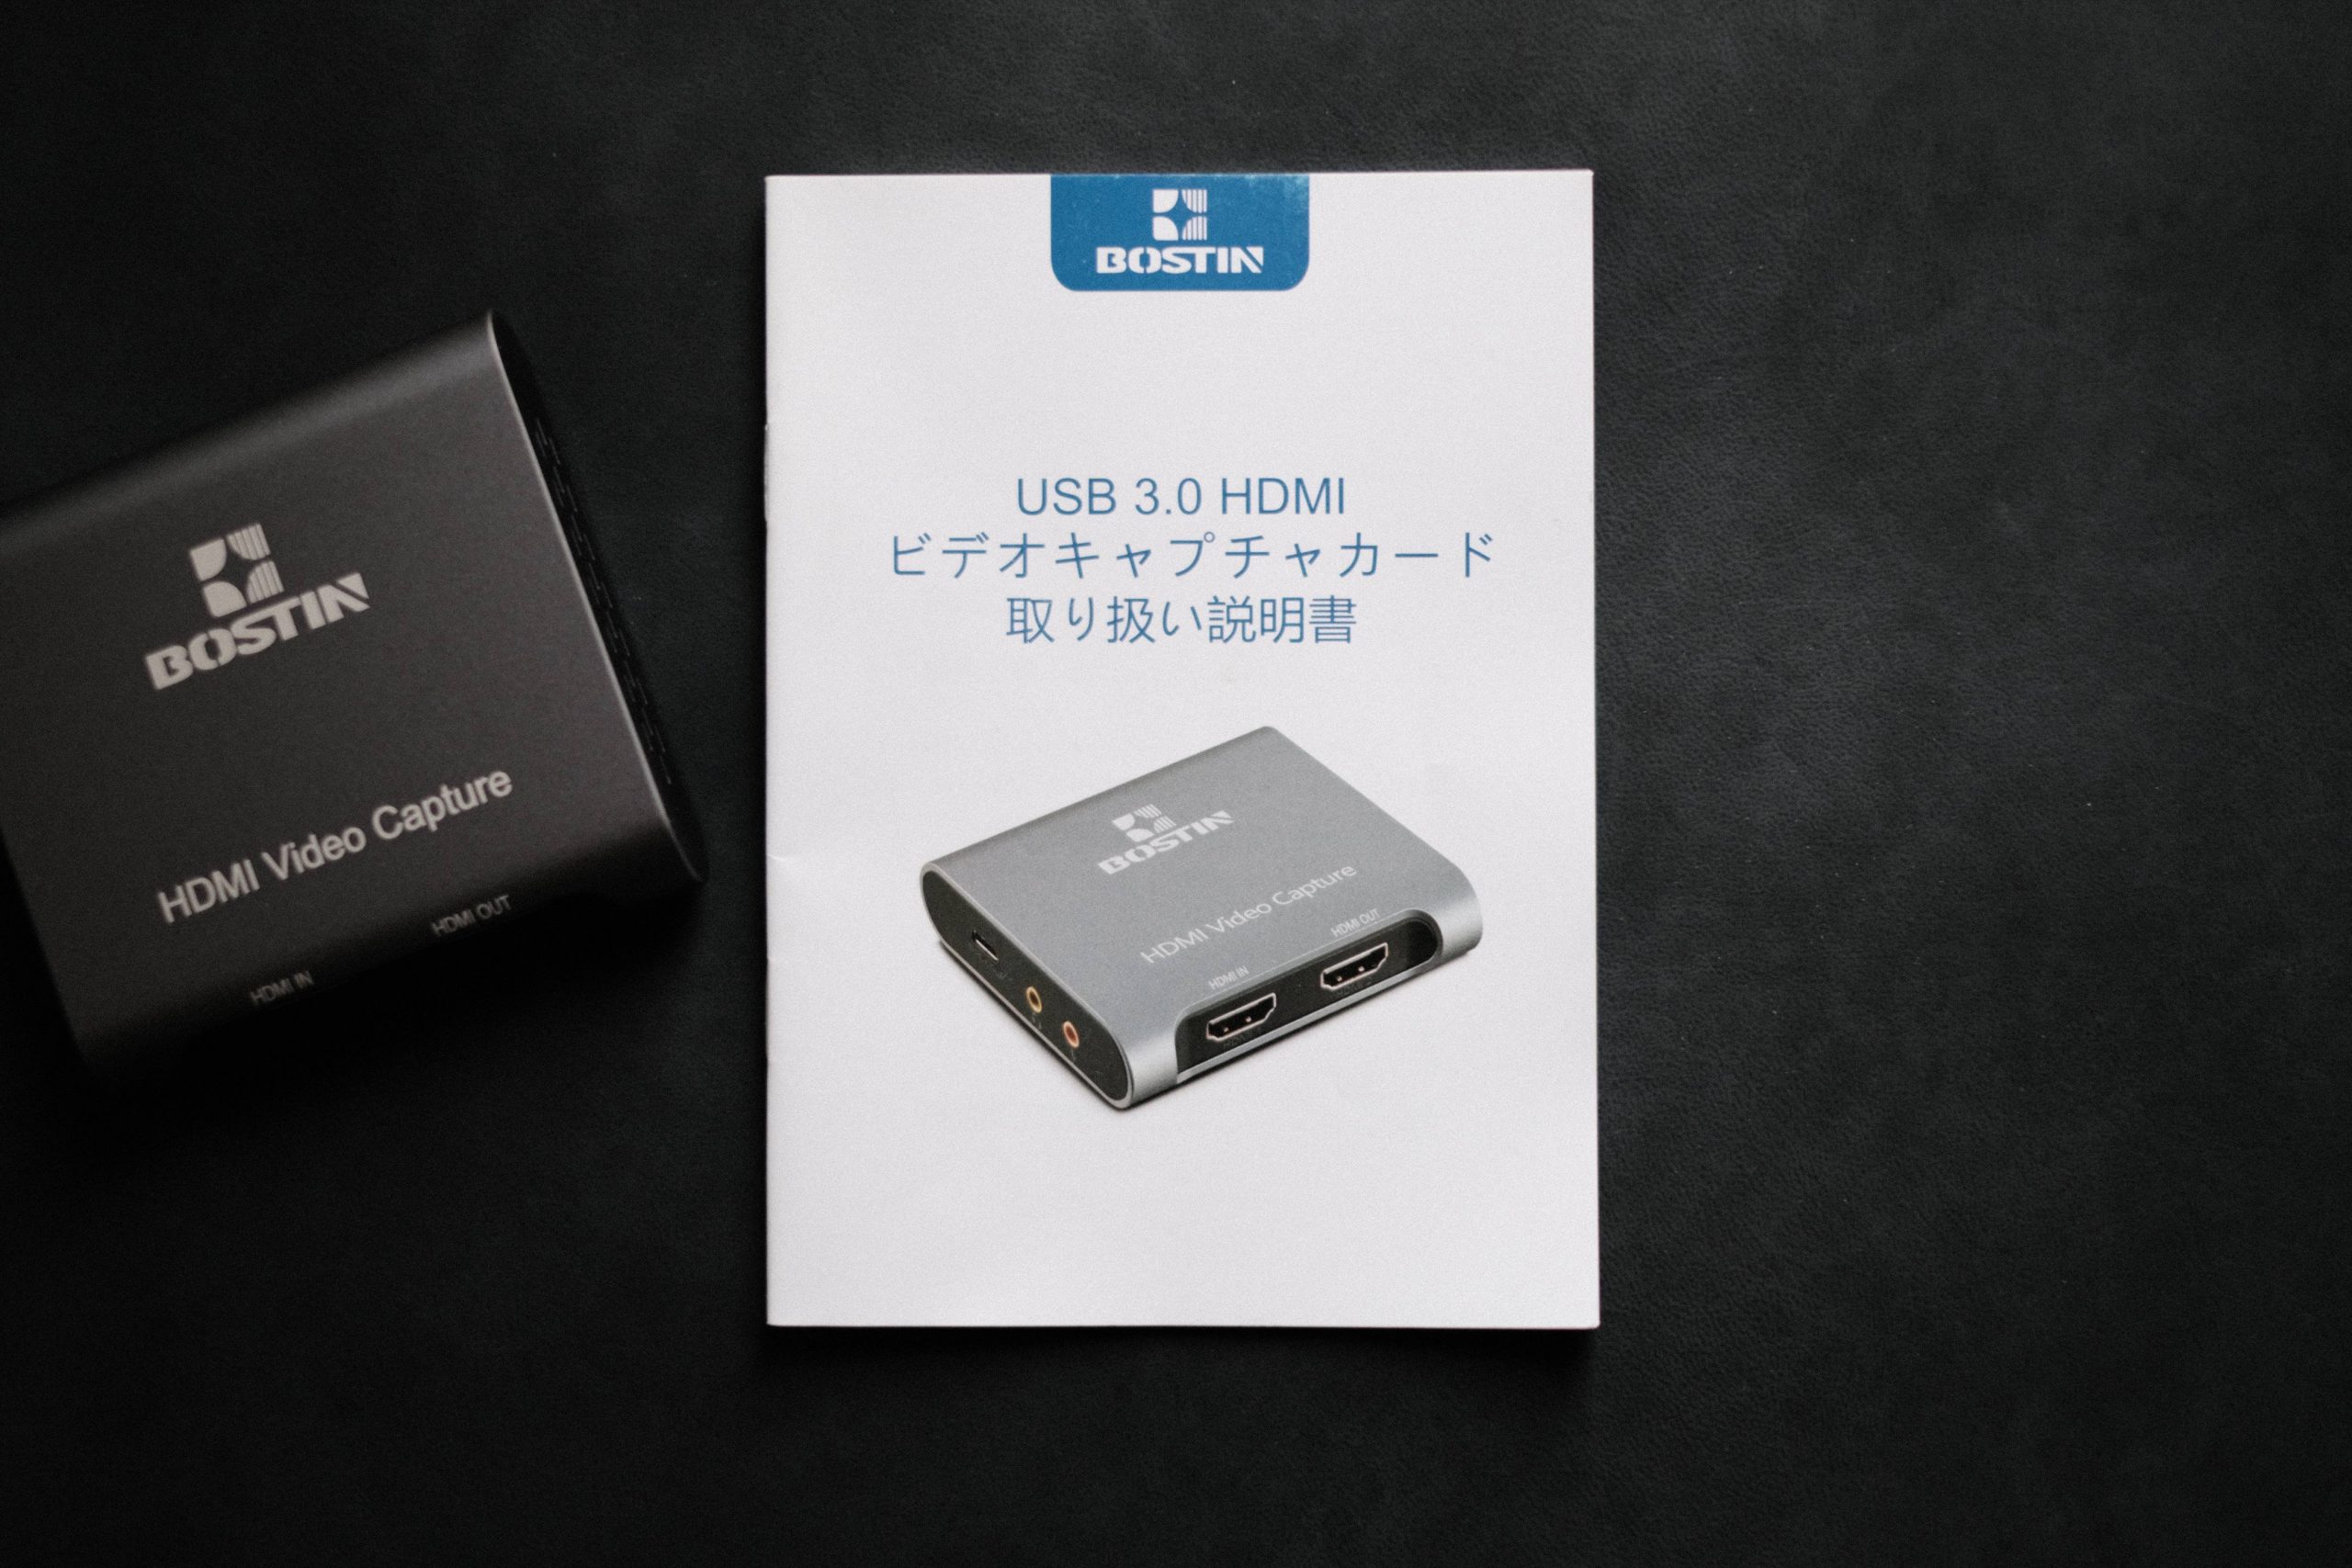 BOSTIN USB3.0HDMI Video Audio Capture